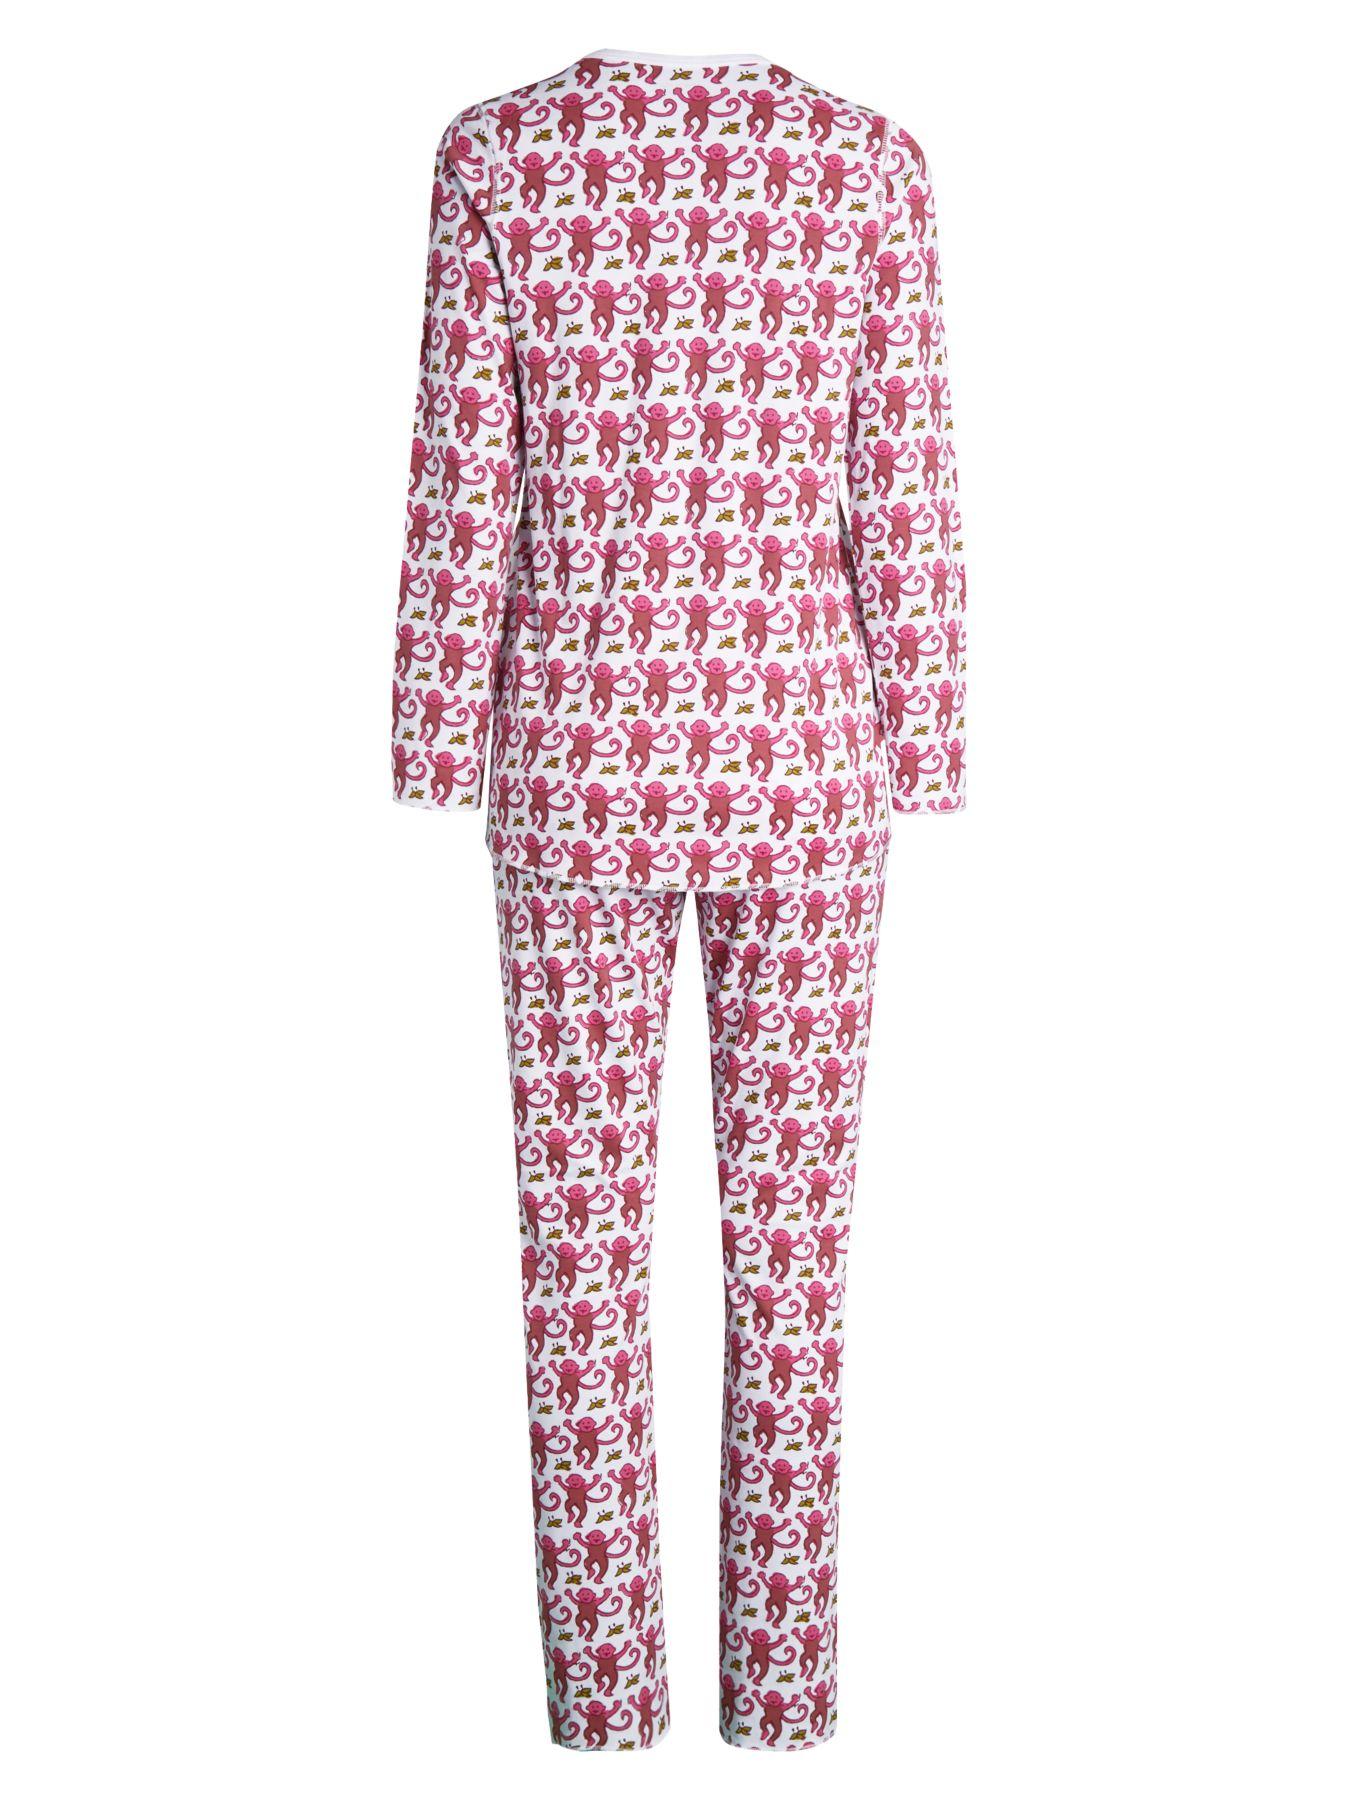 Roberta Roller Rabbit Cotton Monkey Print 2-piece Pajama Set in Pink - Lyst